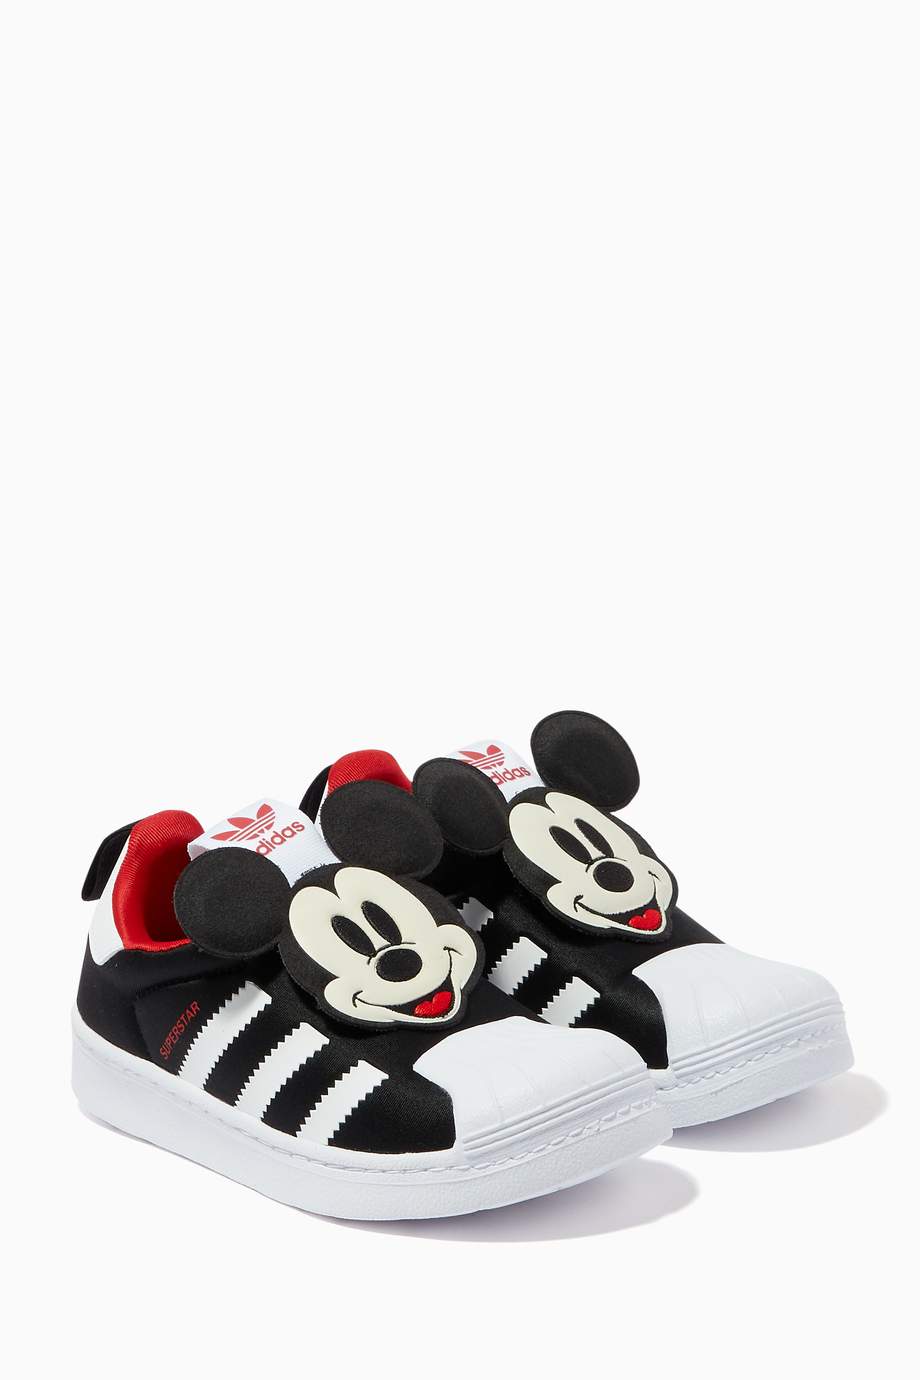 Shop adidas Originals Black x Disney Superstar 360 Sneakers in Textile for Kids | Ounass UAE